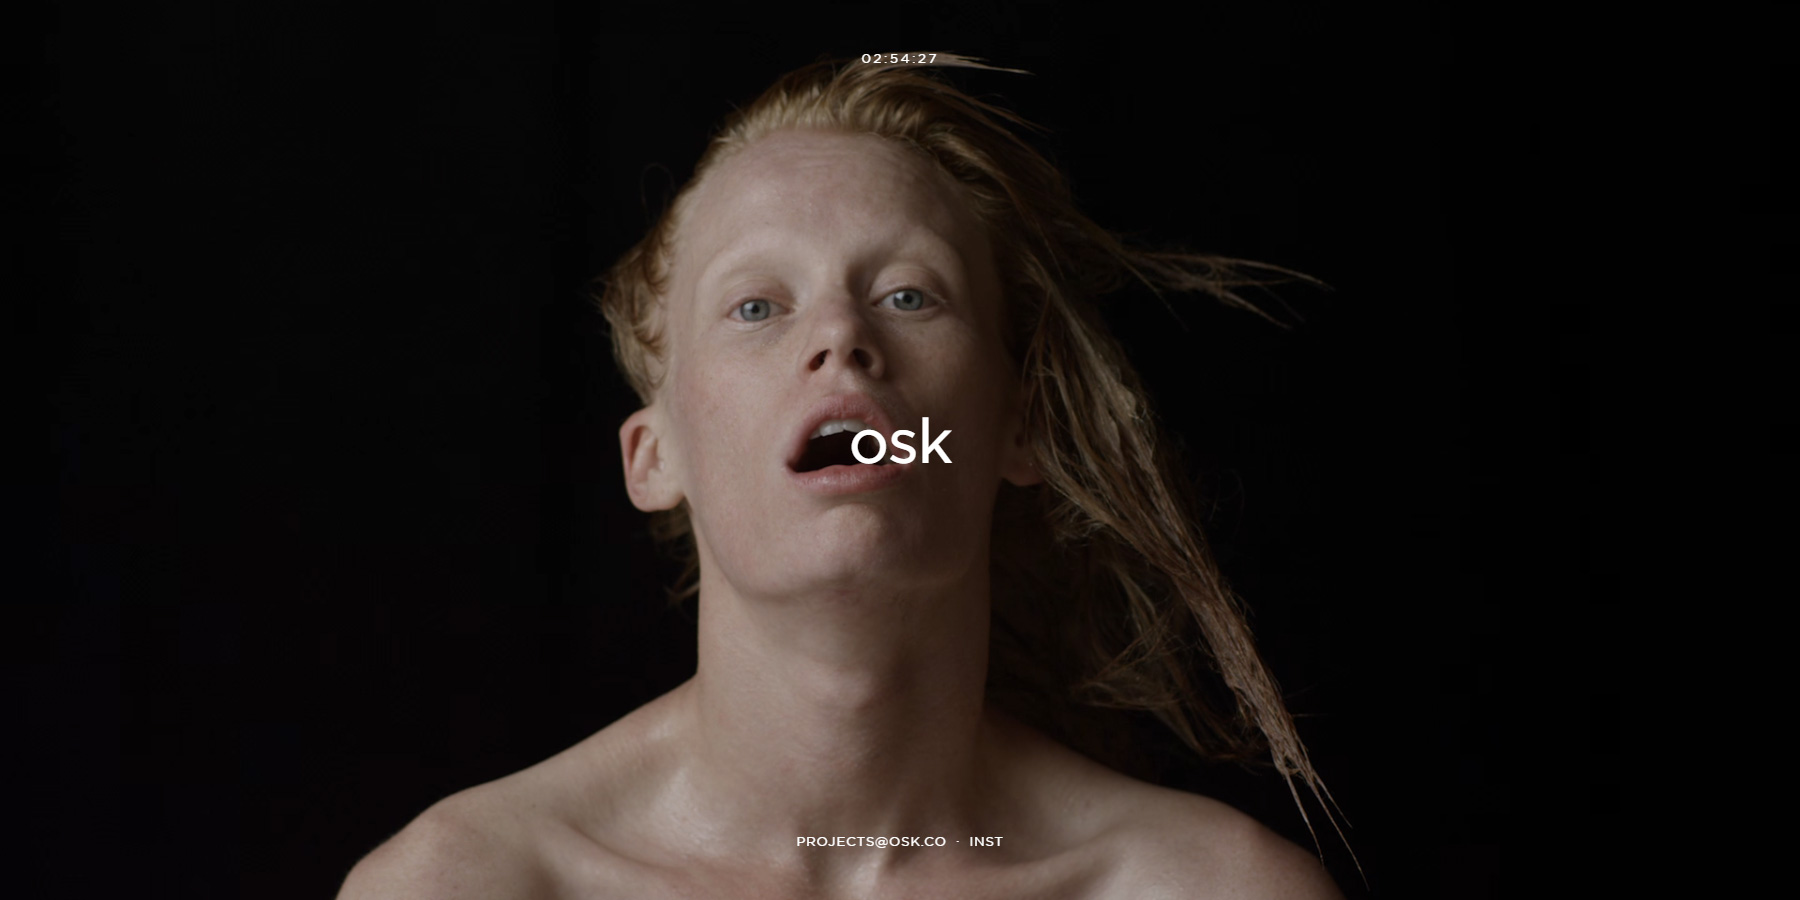 Osk - Website of the Day